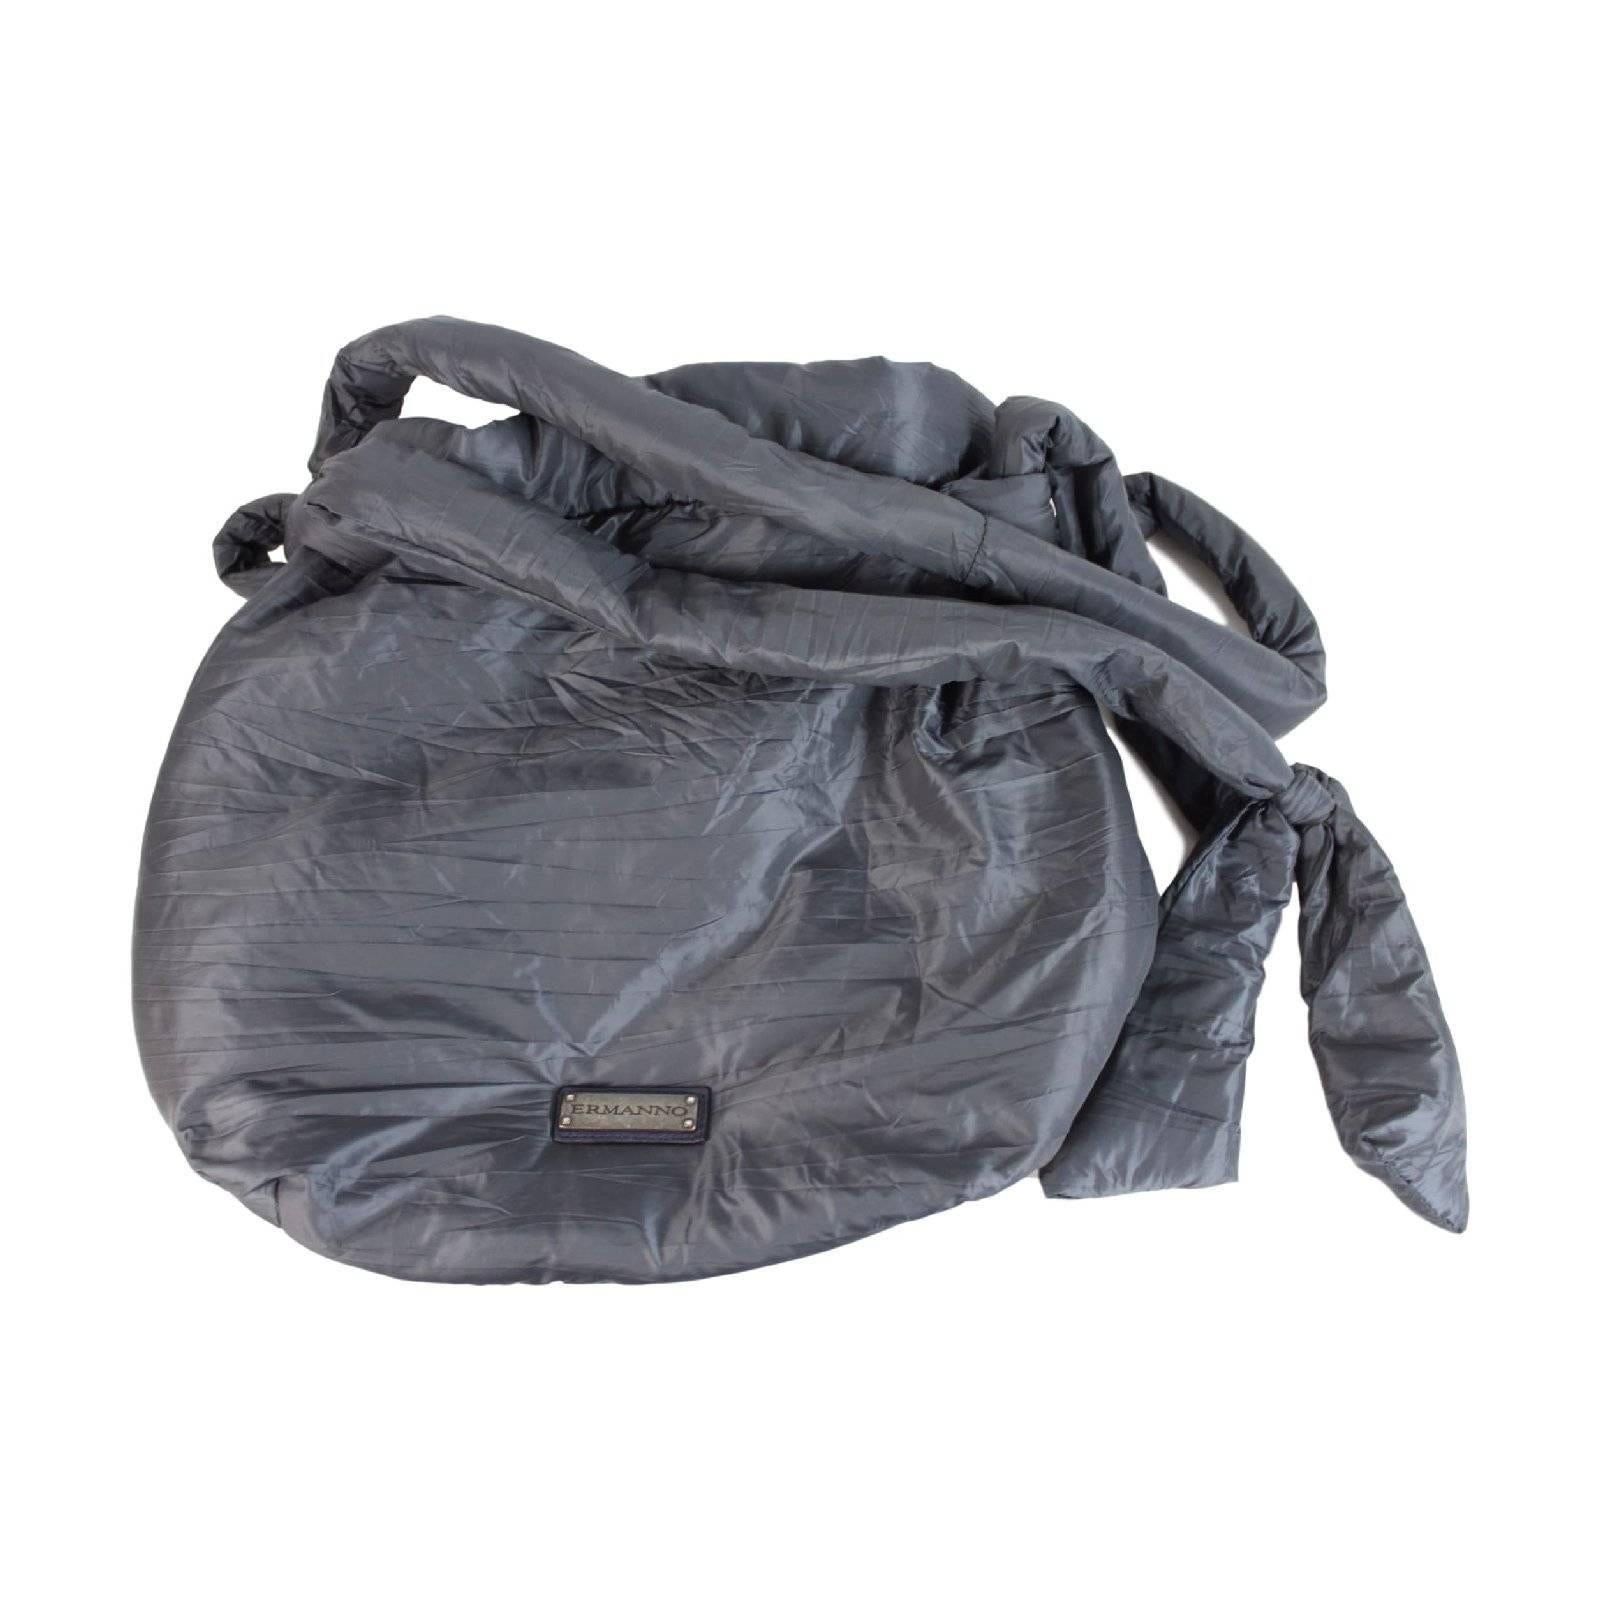 Gray Ermanno Scervino gray shopping bag handbag polyester women’s 2000s For Sale